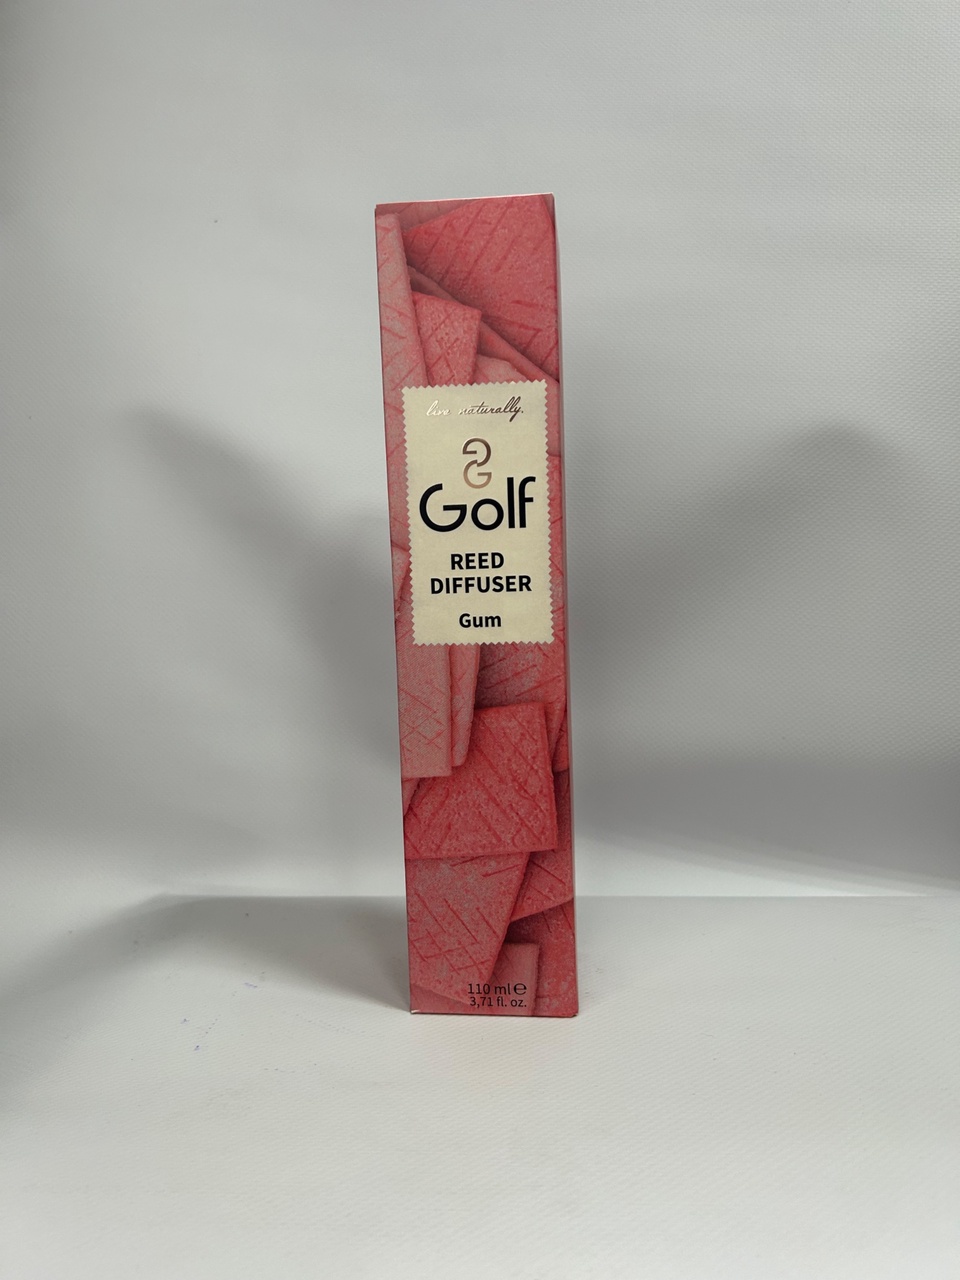 Ароматический диффузор Golf “Жвачка”, 110ml - 550 ₽, заказать онлайн.